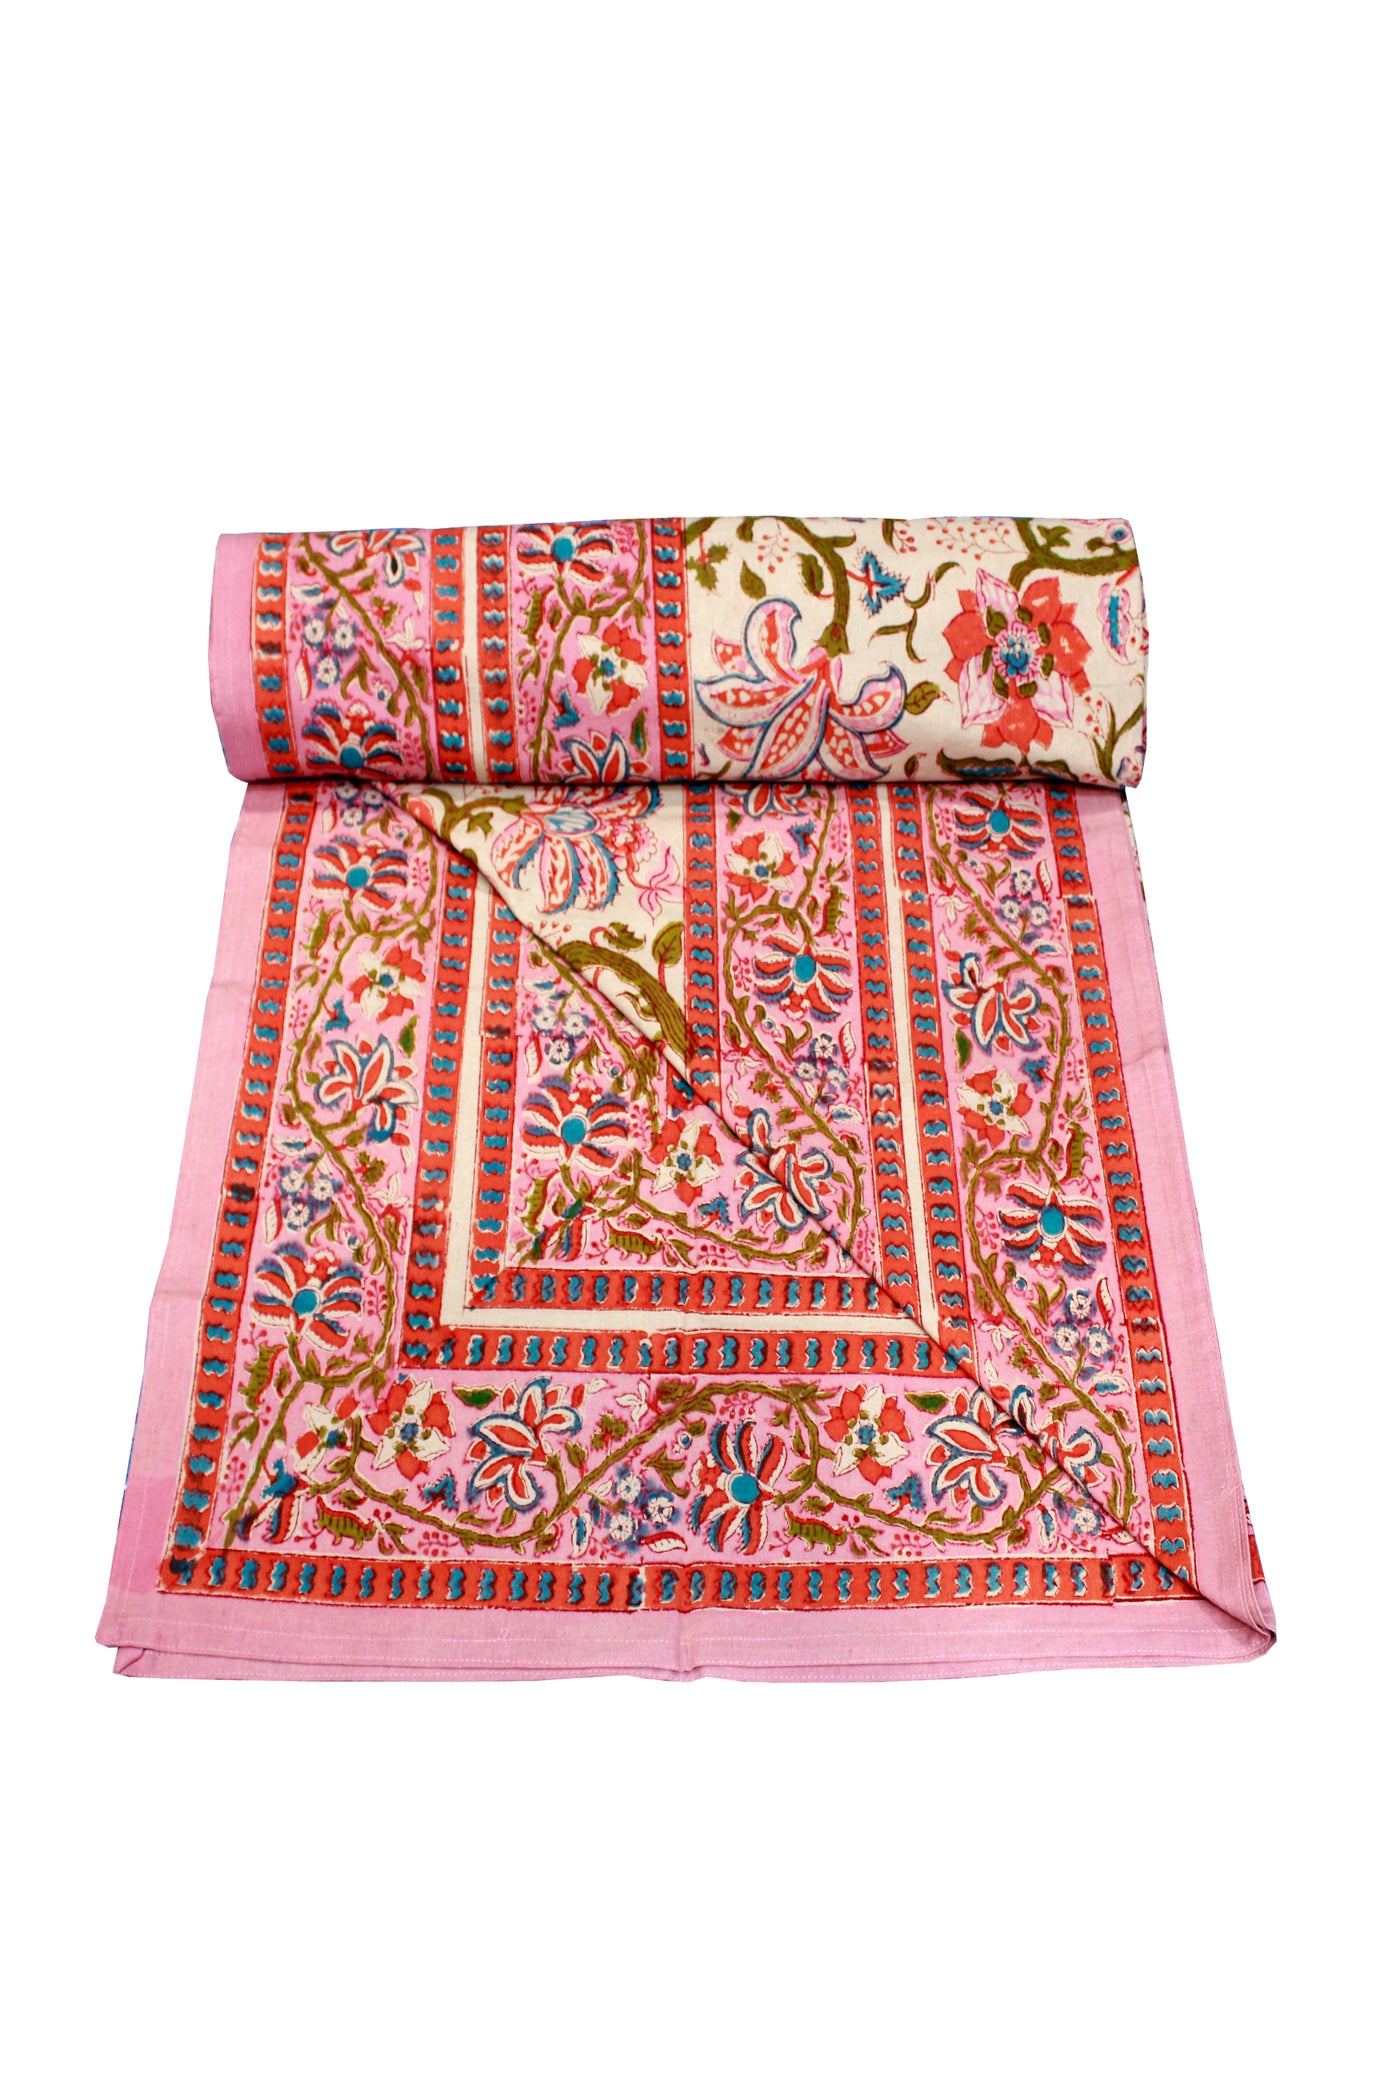 Cotton Flower Jaal Hand Block Print  Bedsheet in Blossom Pink